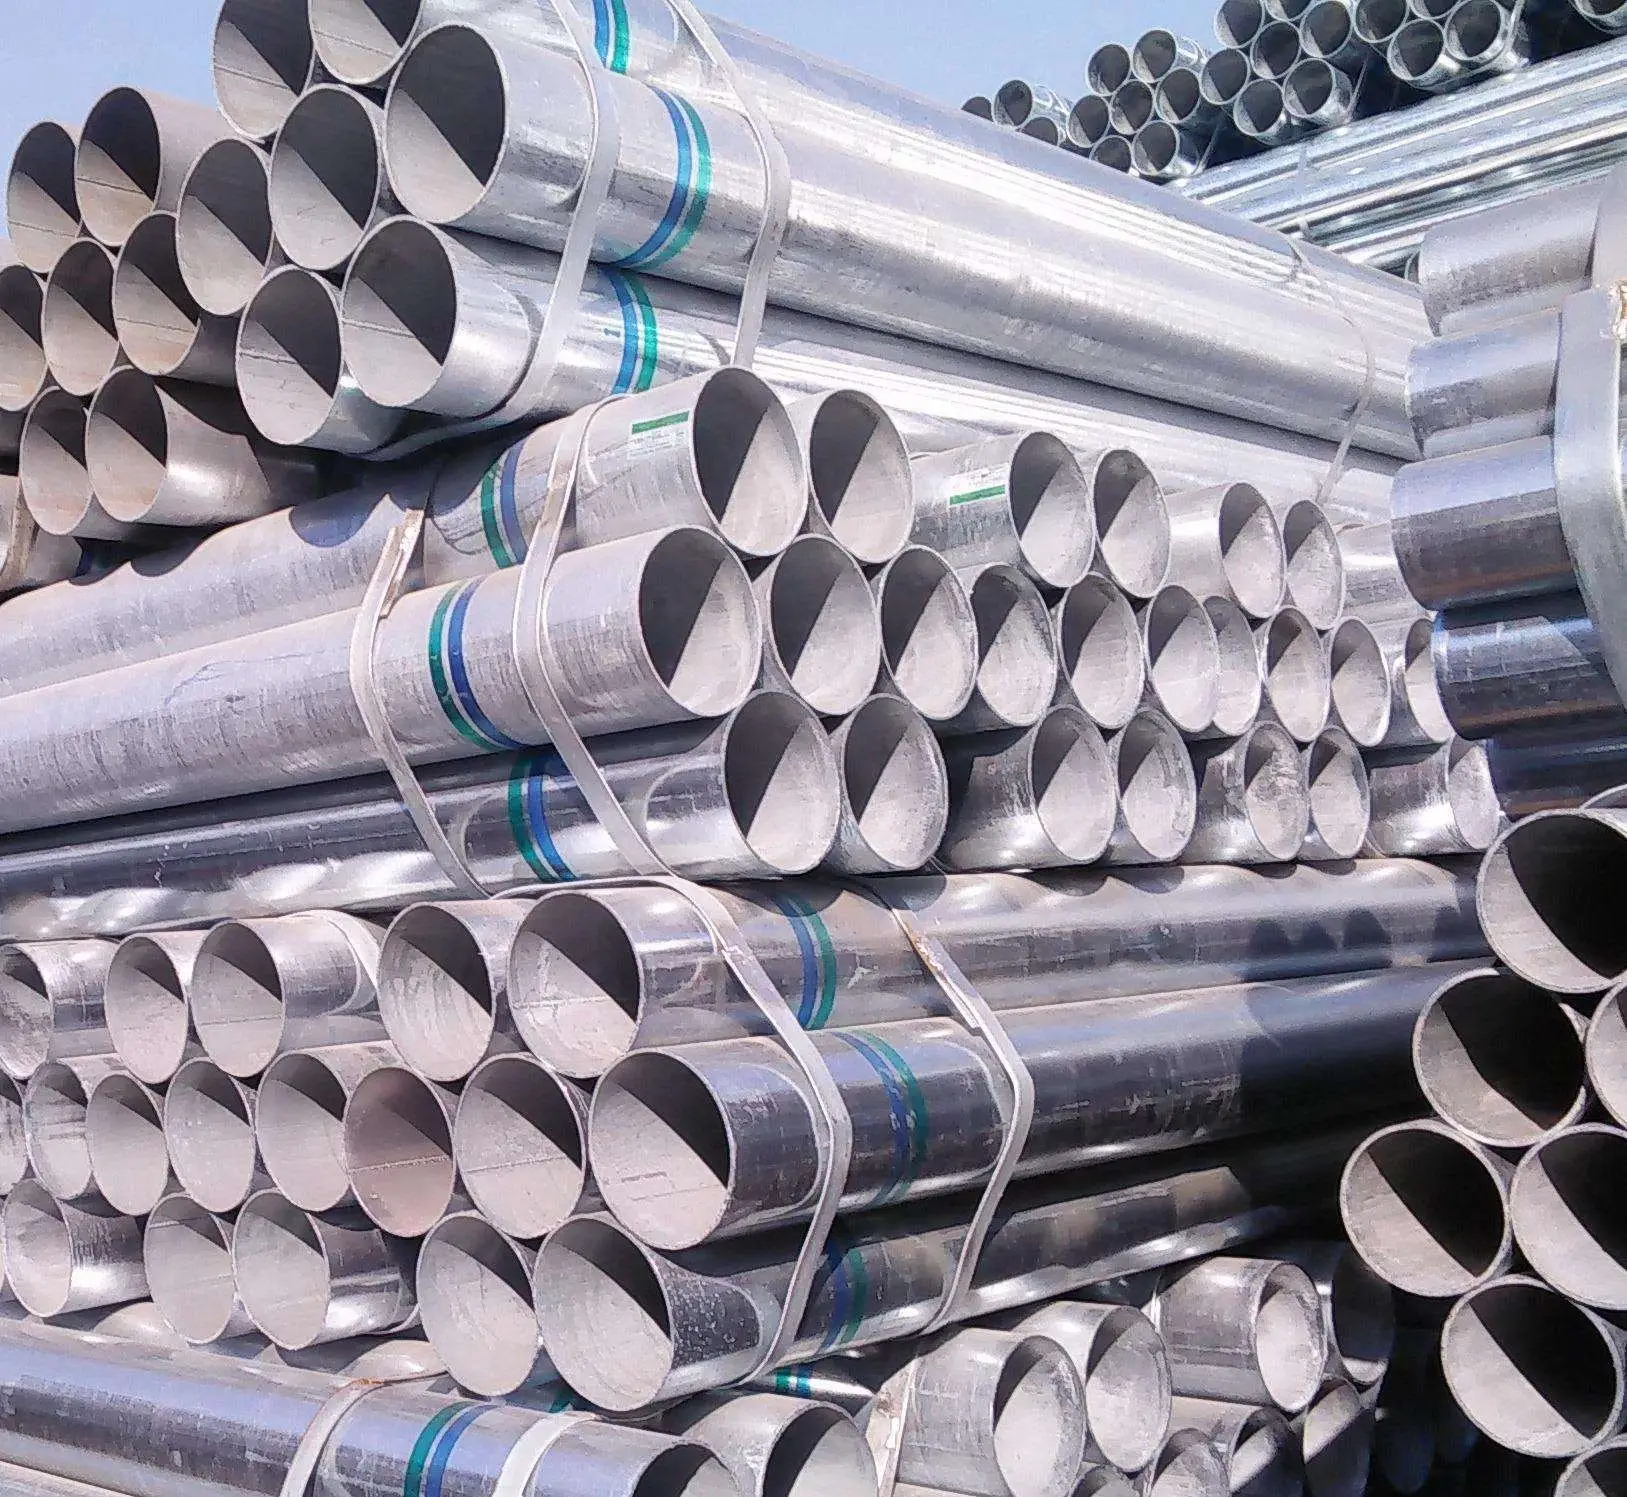 Characteristics of galvanized steel pipe